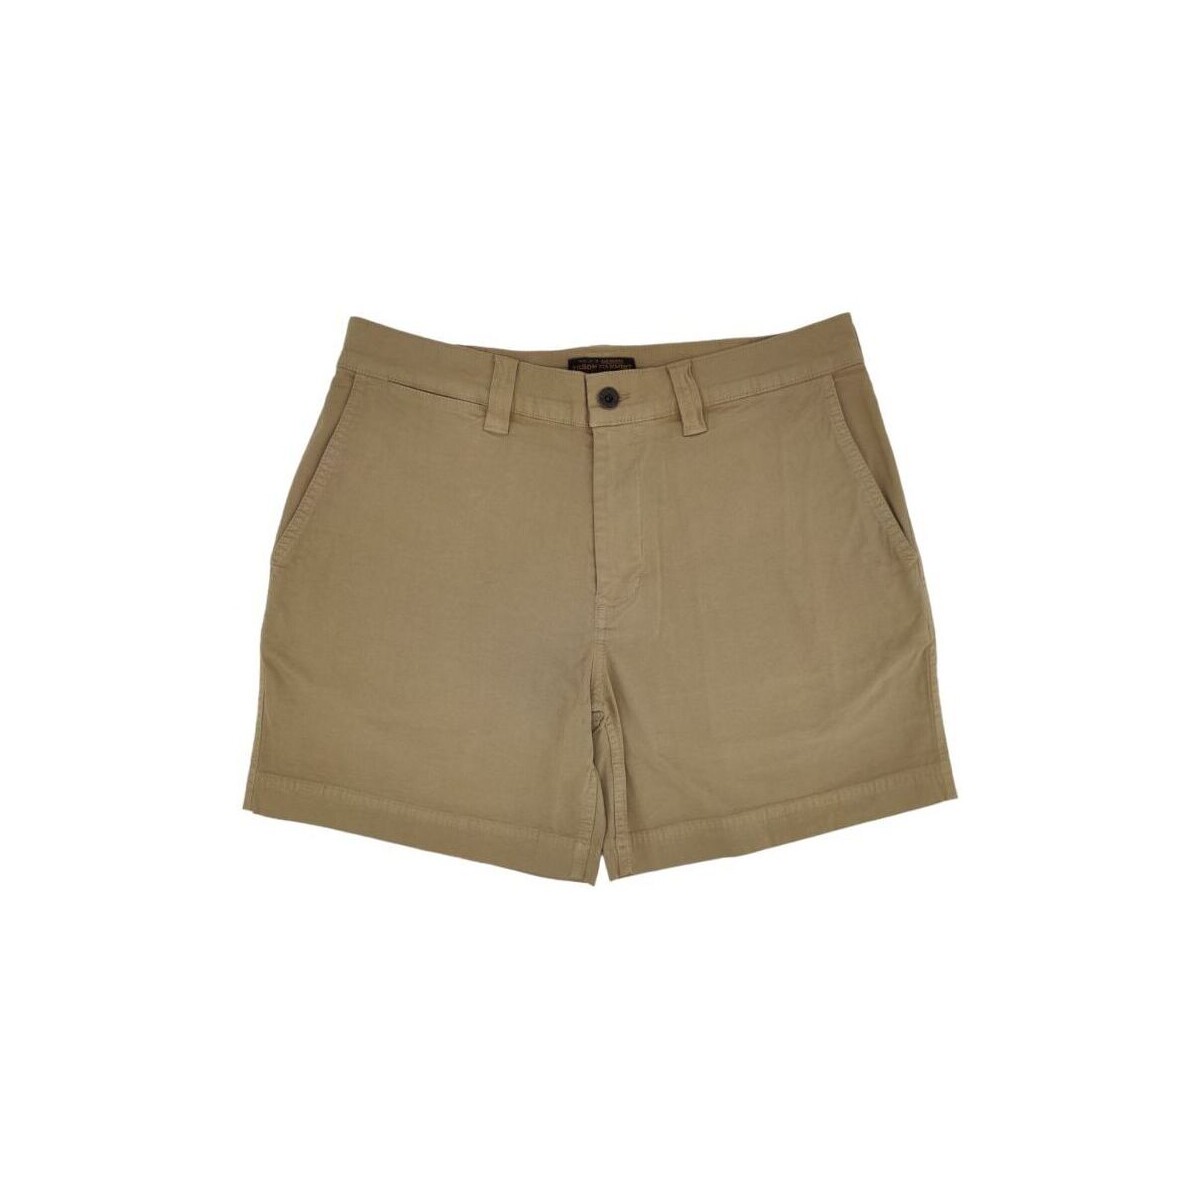 Vêtements Homme Shorts / Bermudas Filson Shorts Granite Mountain 6IN Homme Grey Khaki Beige